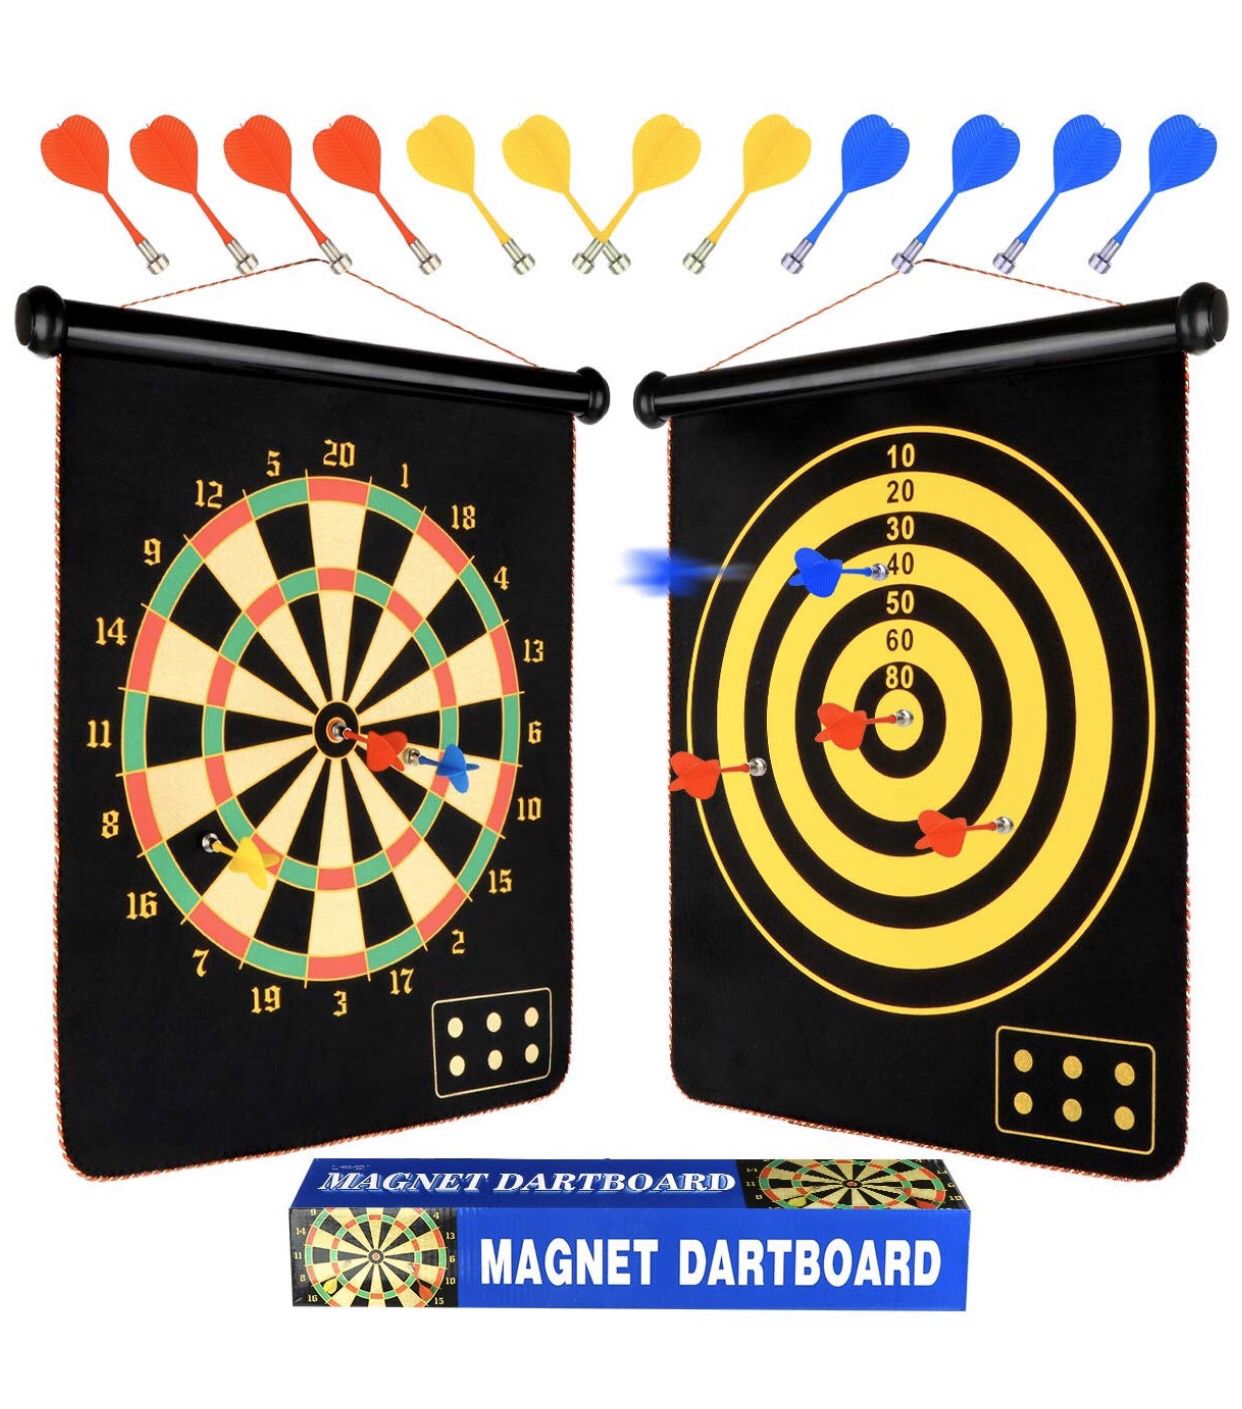 Magnet dartboard *BRAND NEW*